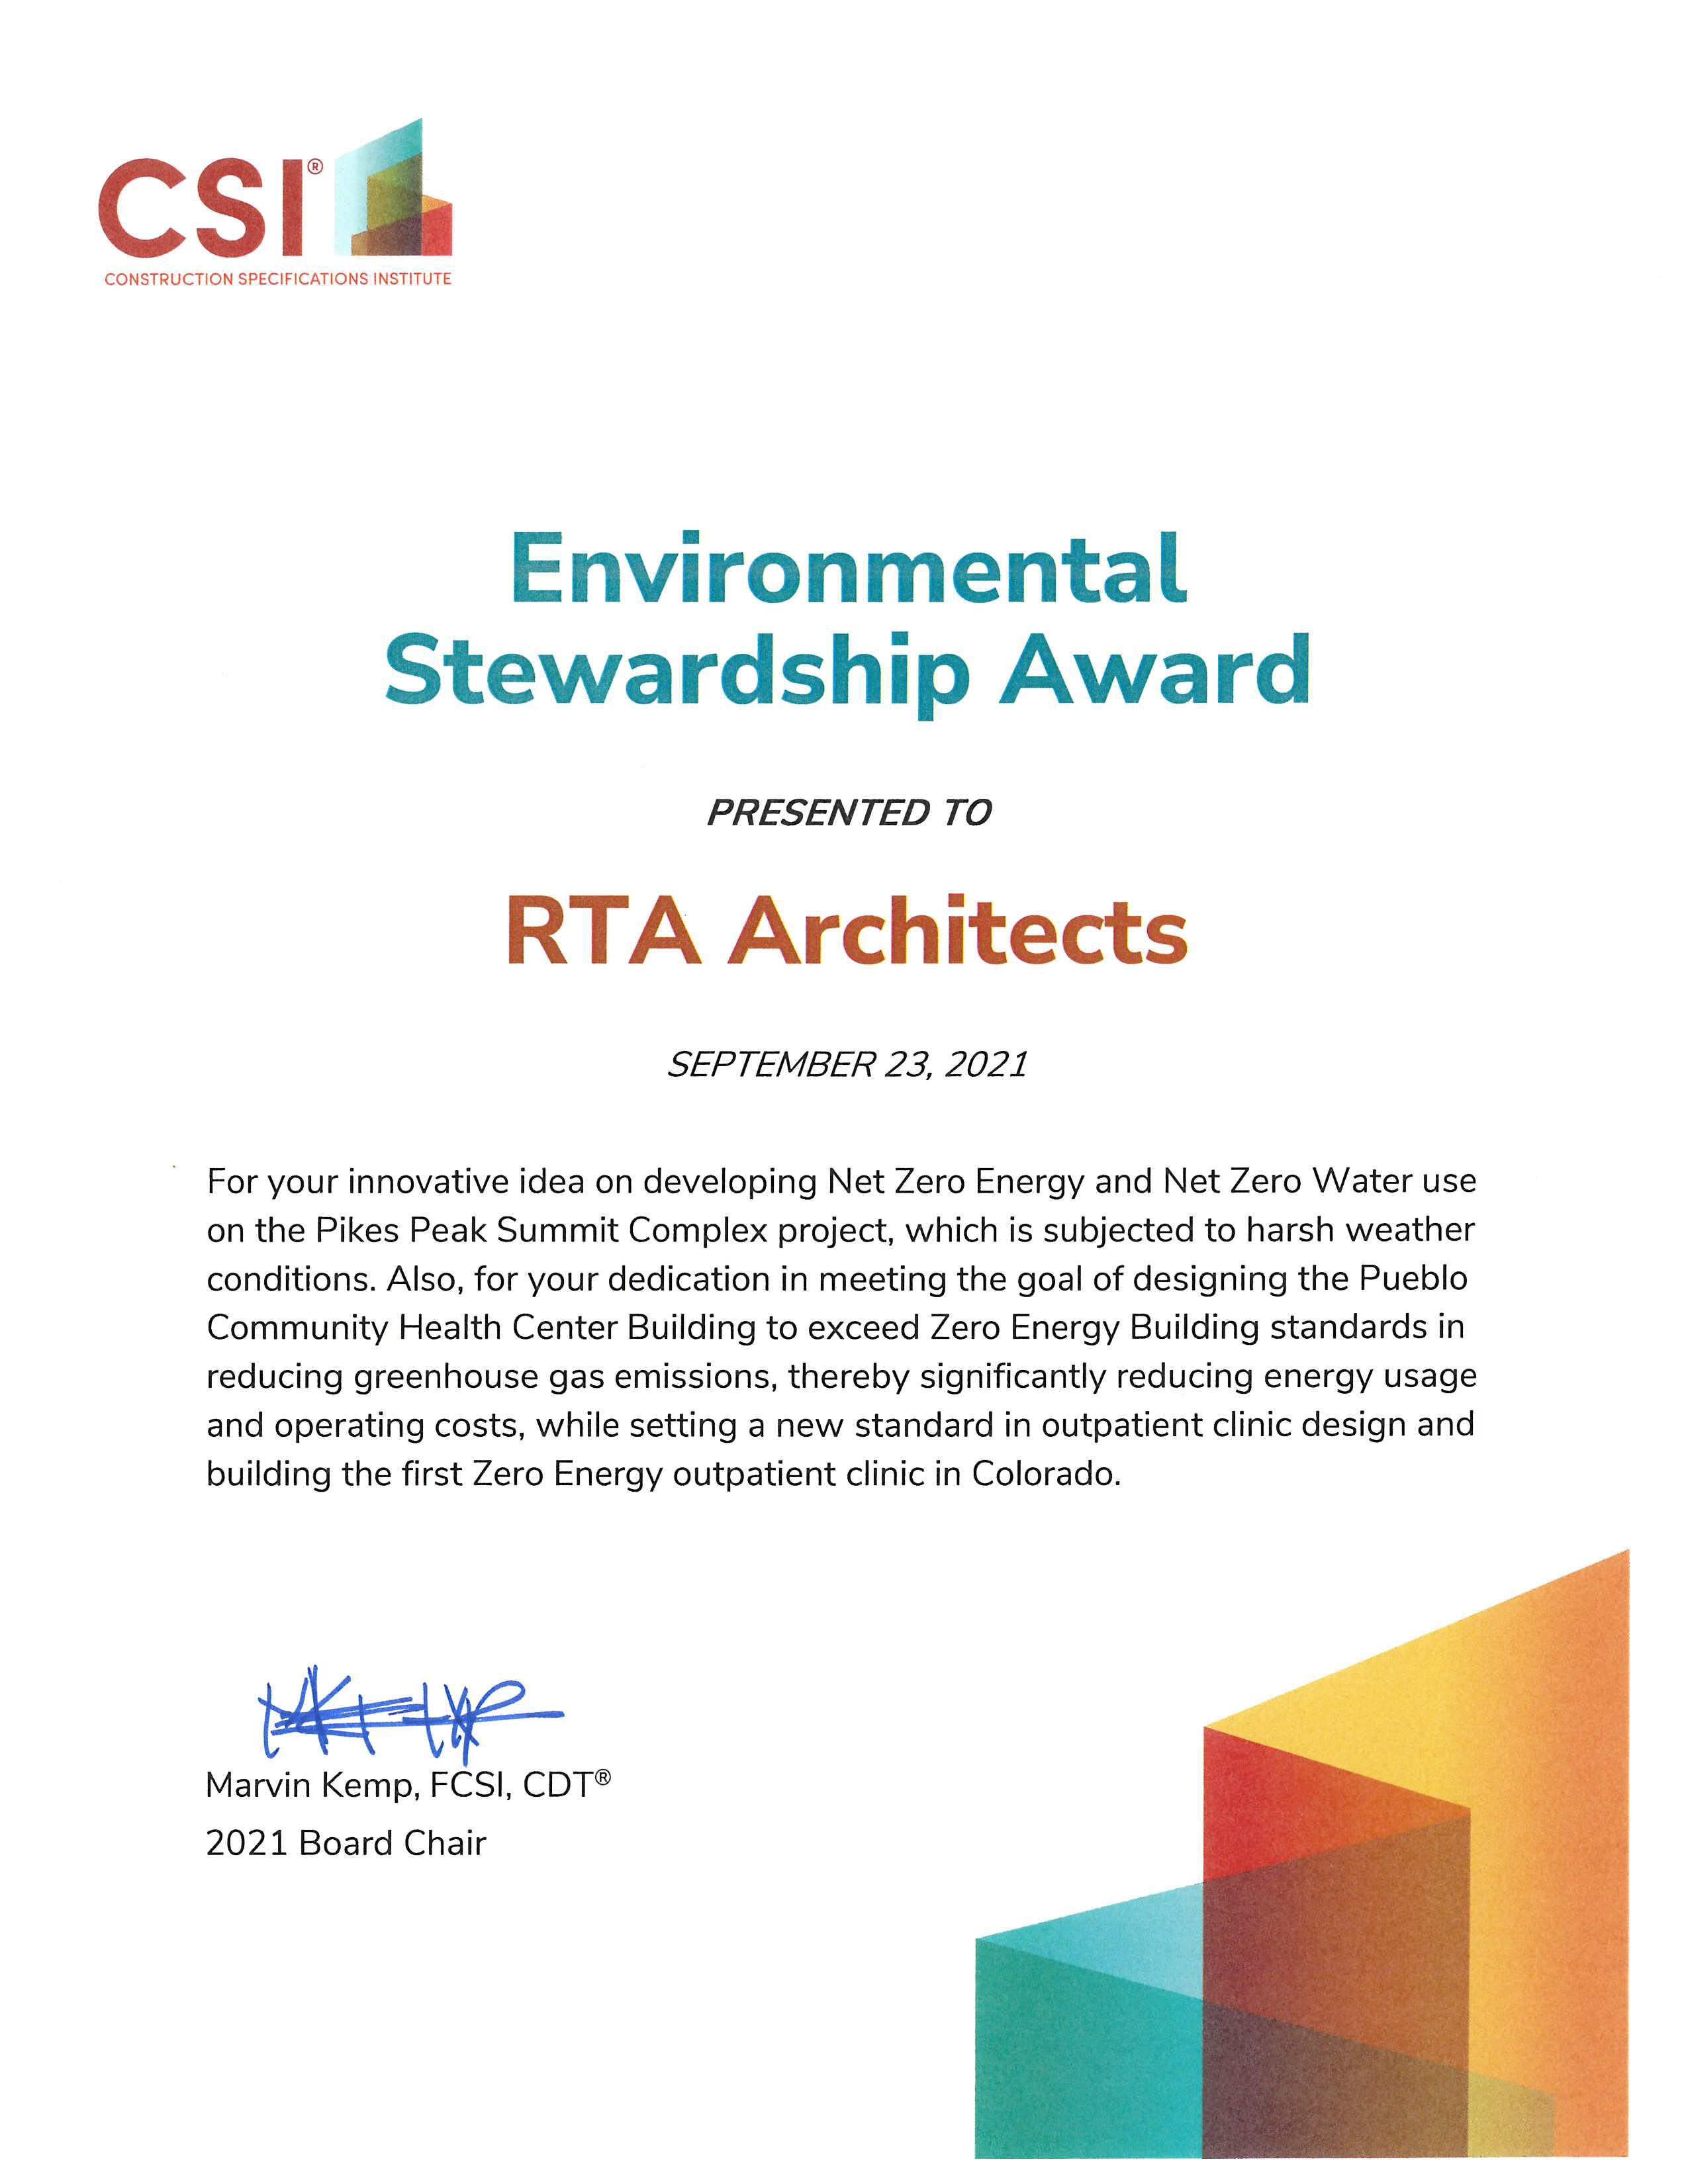 CSI Environmental Stewardship Award 2021 lo